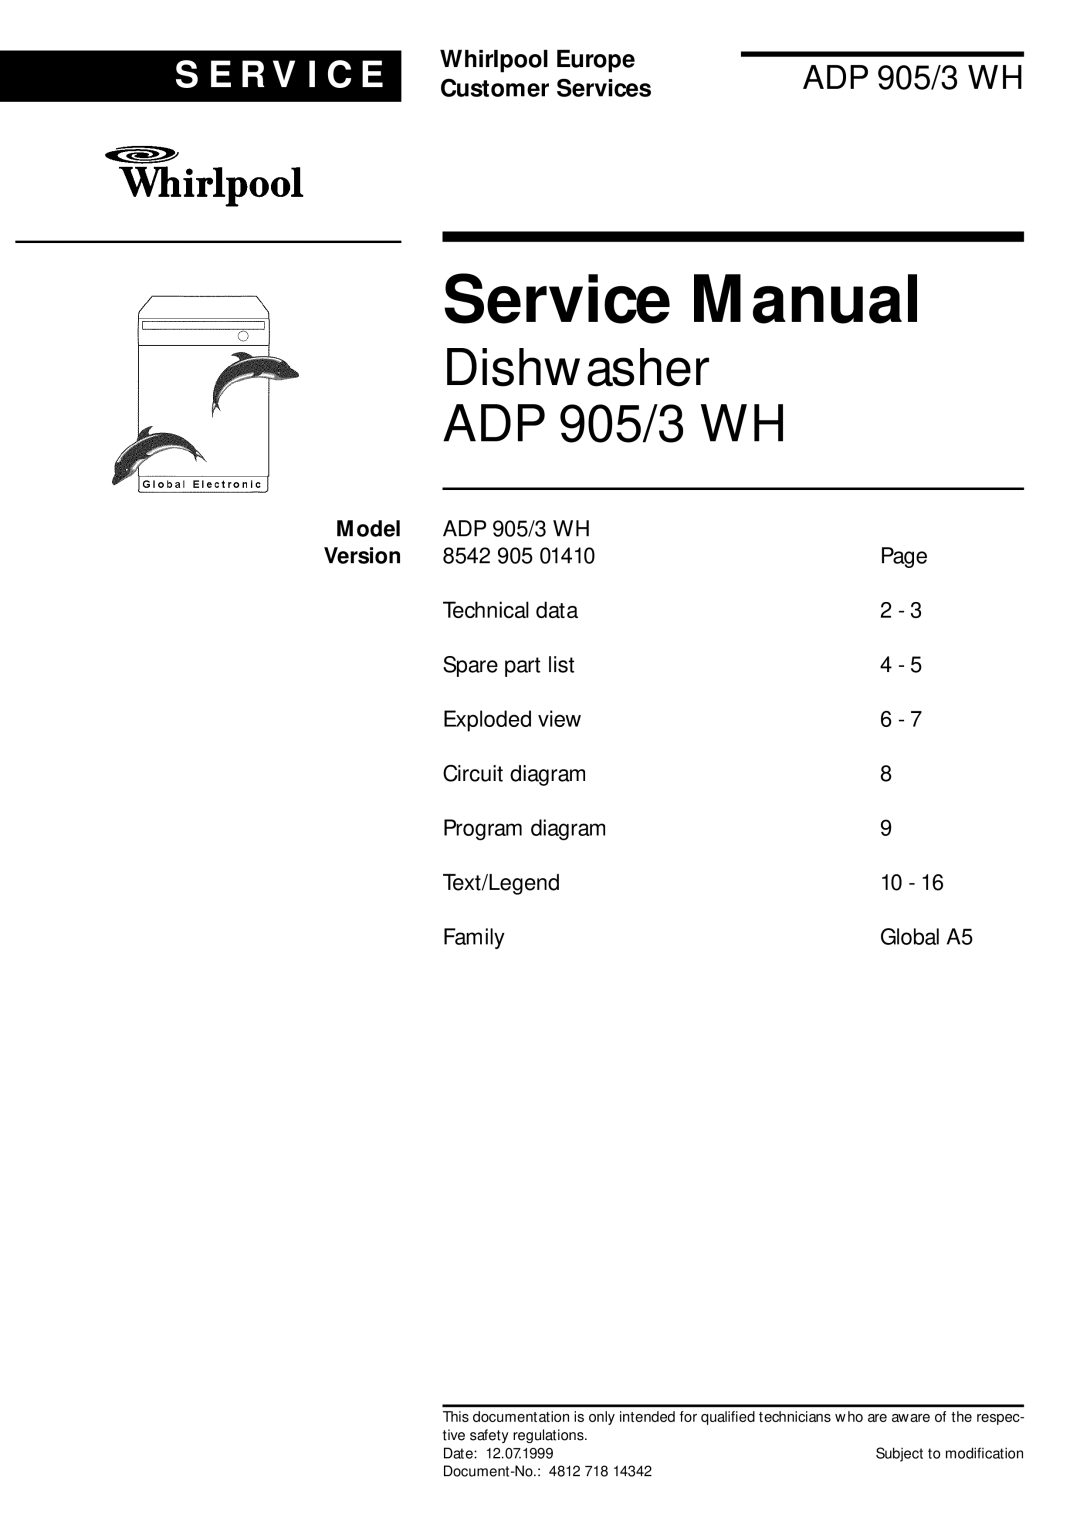 Whirlpool service manual Model, Dishwasher ADP 905/3 WH, S E R V I C E, Whirlpool Europe, Customer Services 